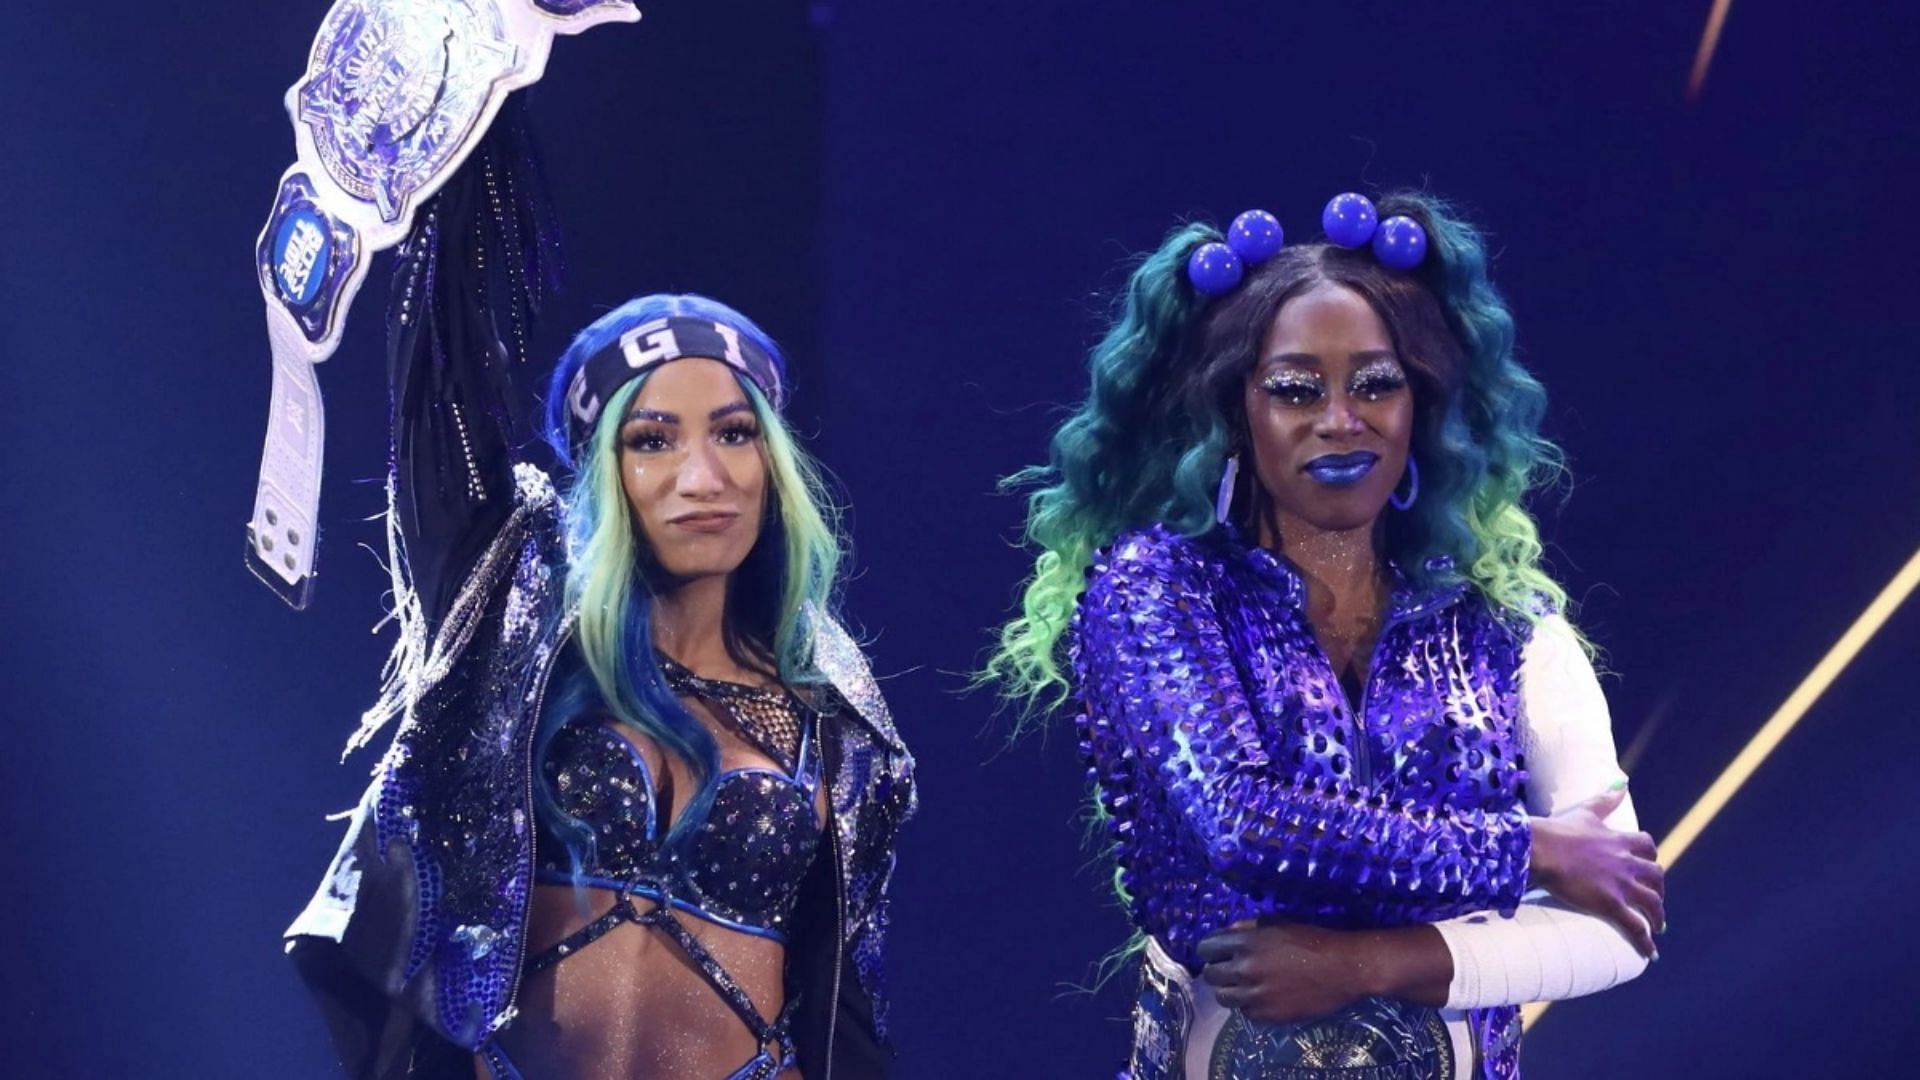 Sasha Banks and Naomi could be headed back to WWE